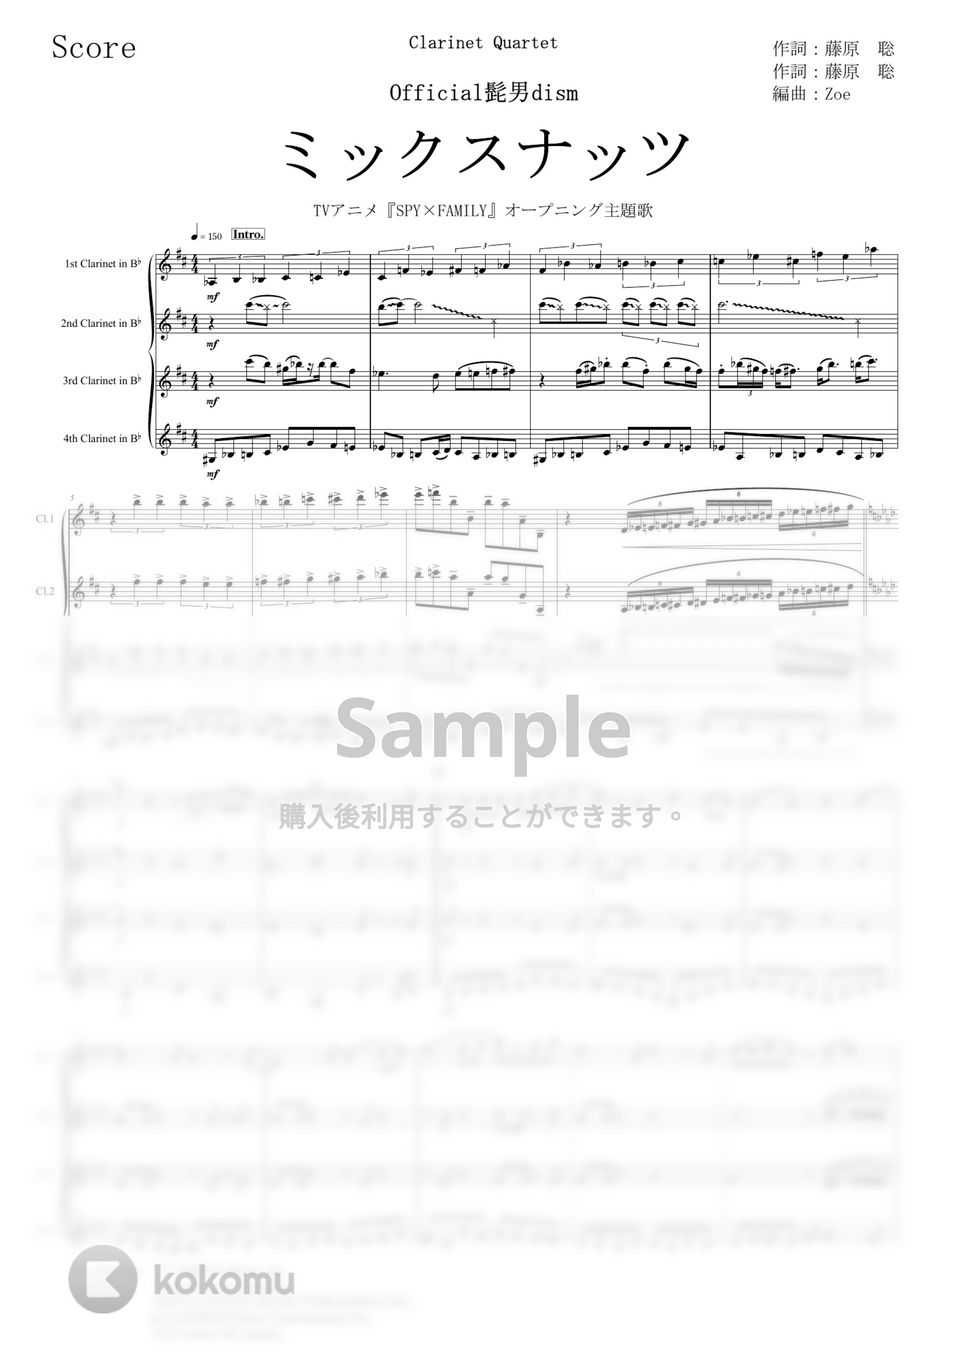 Official髭男dism - ミックスナッツ  / Bb Clarinet４本で吹ける！ (クラリネット四重奏/Bb管４本/SPY×FAMILY) by Zoe